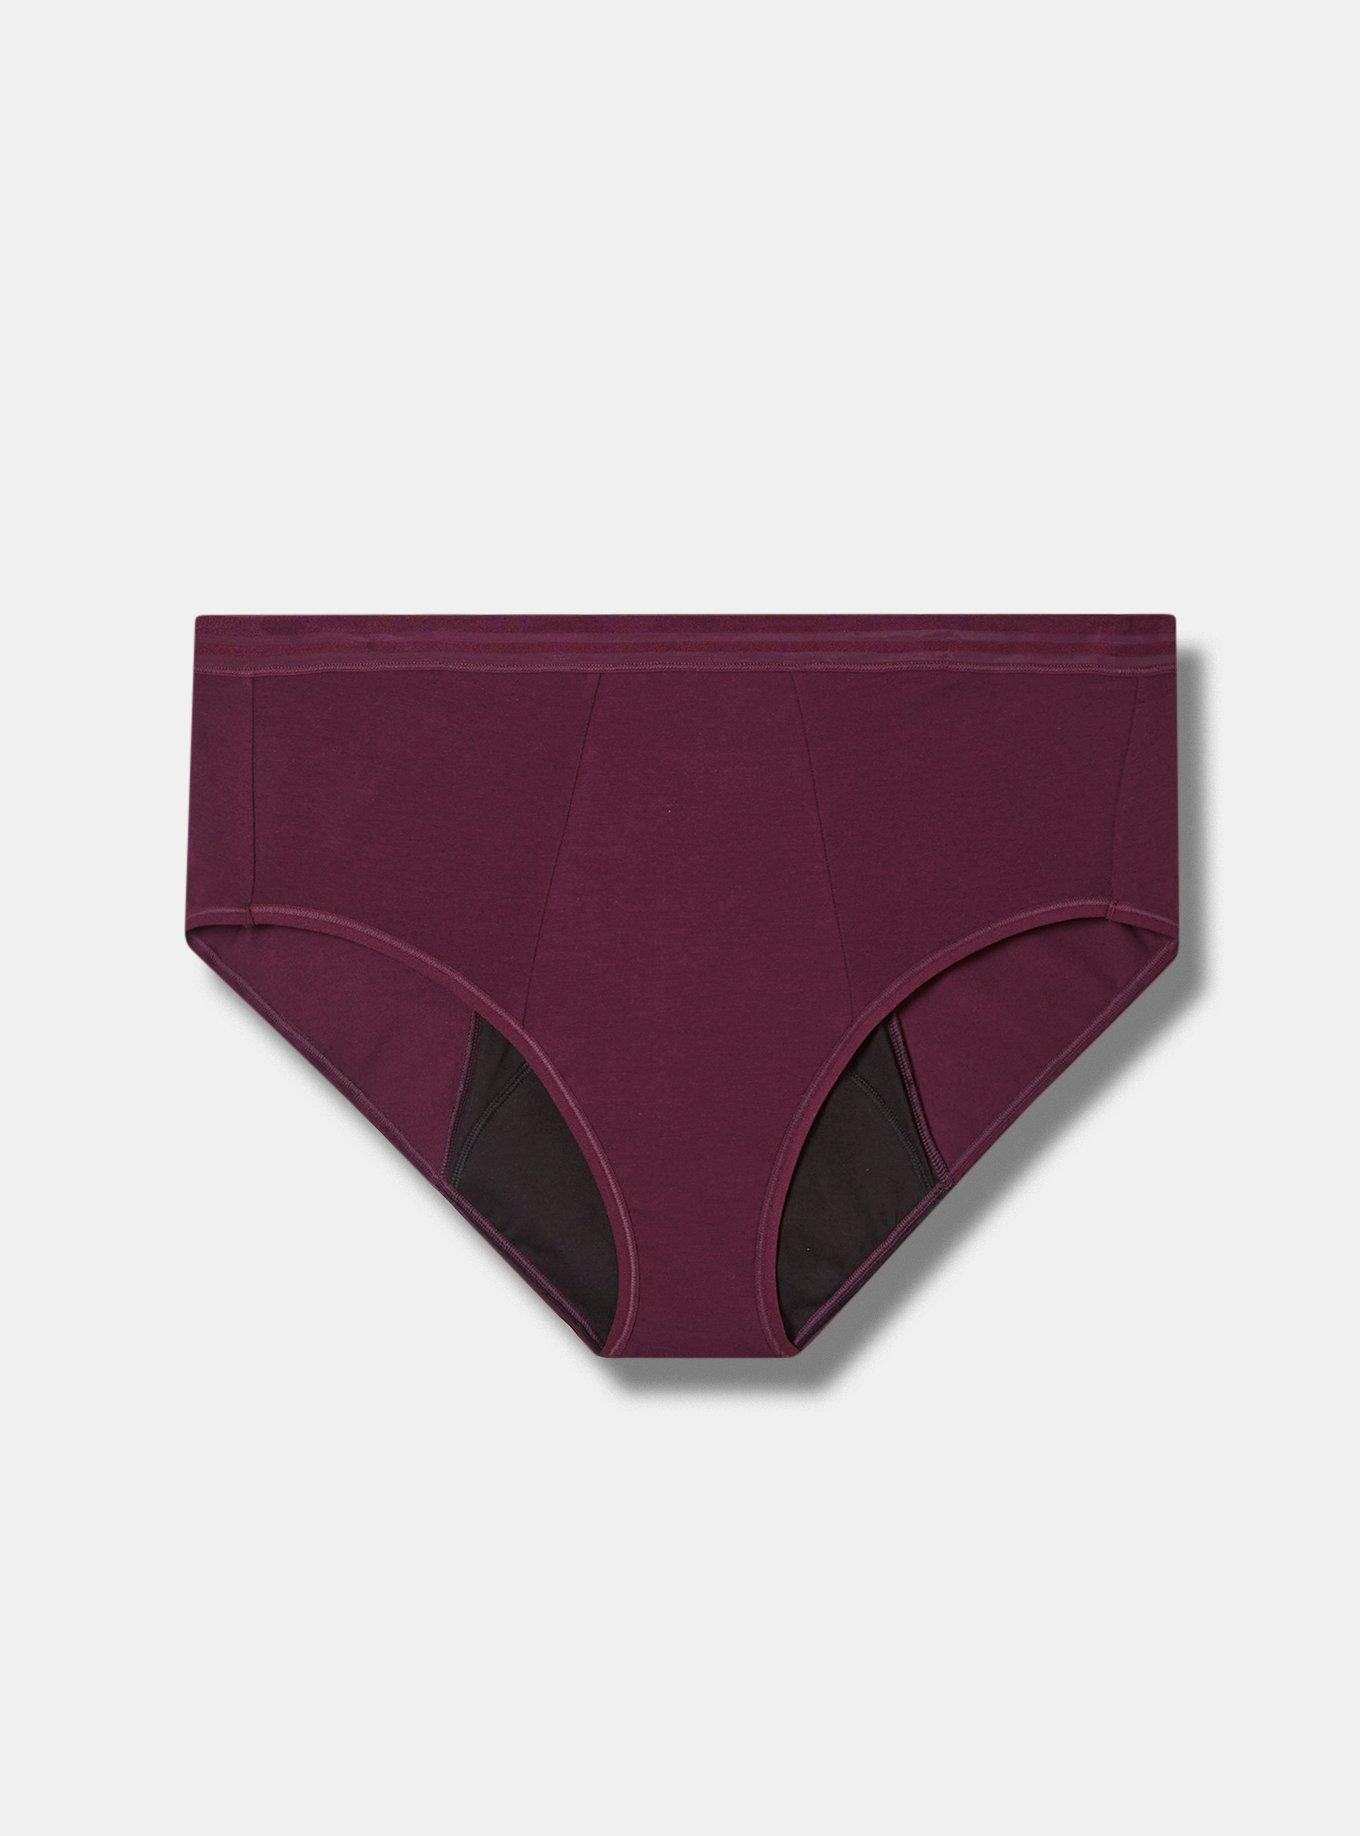 Hanes Women's Cotton Boy Brief Panties, Assorted Colors, Size 7 6 ct